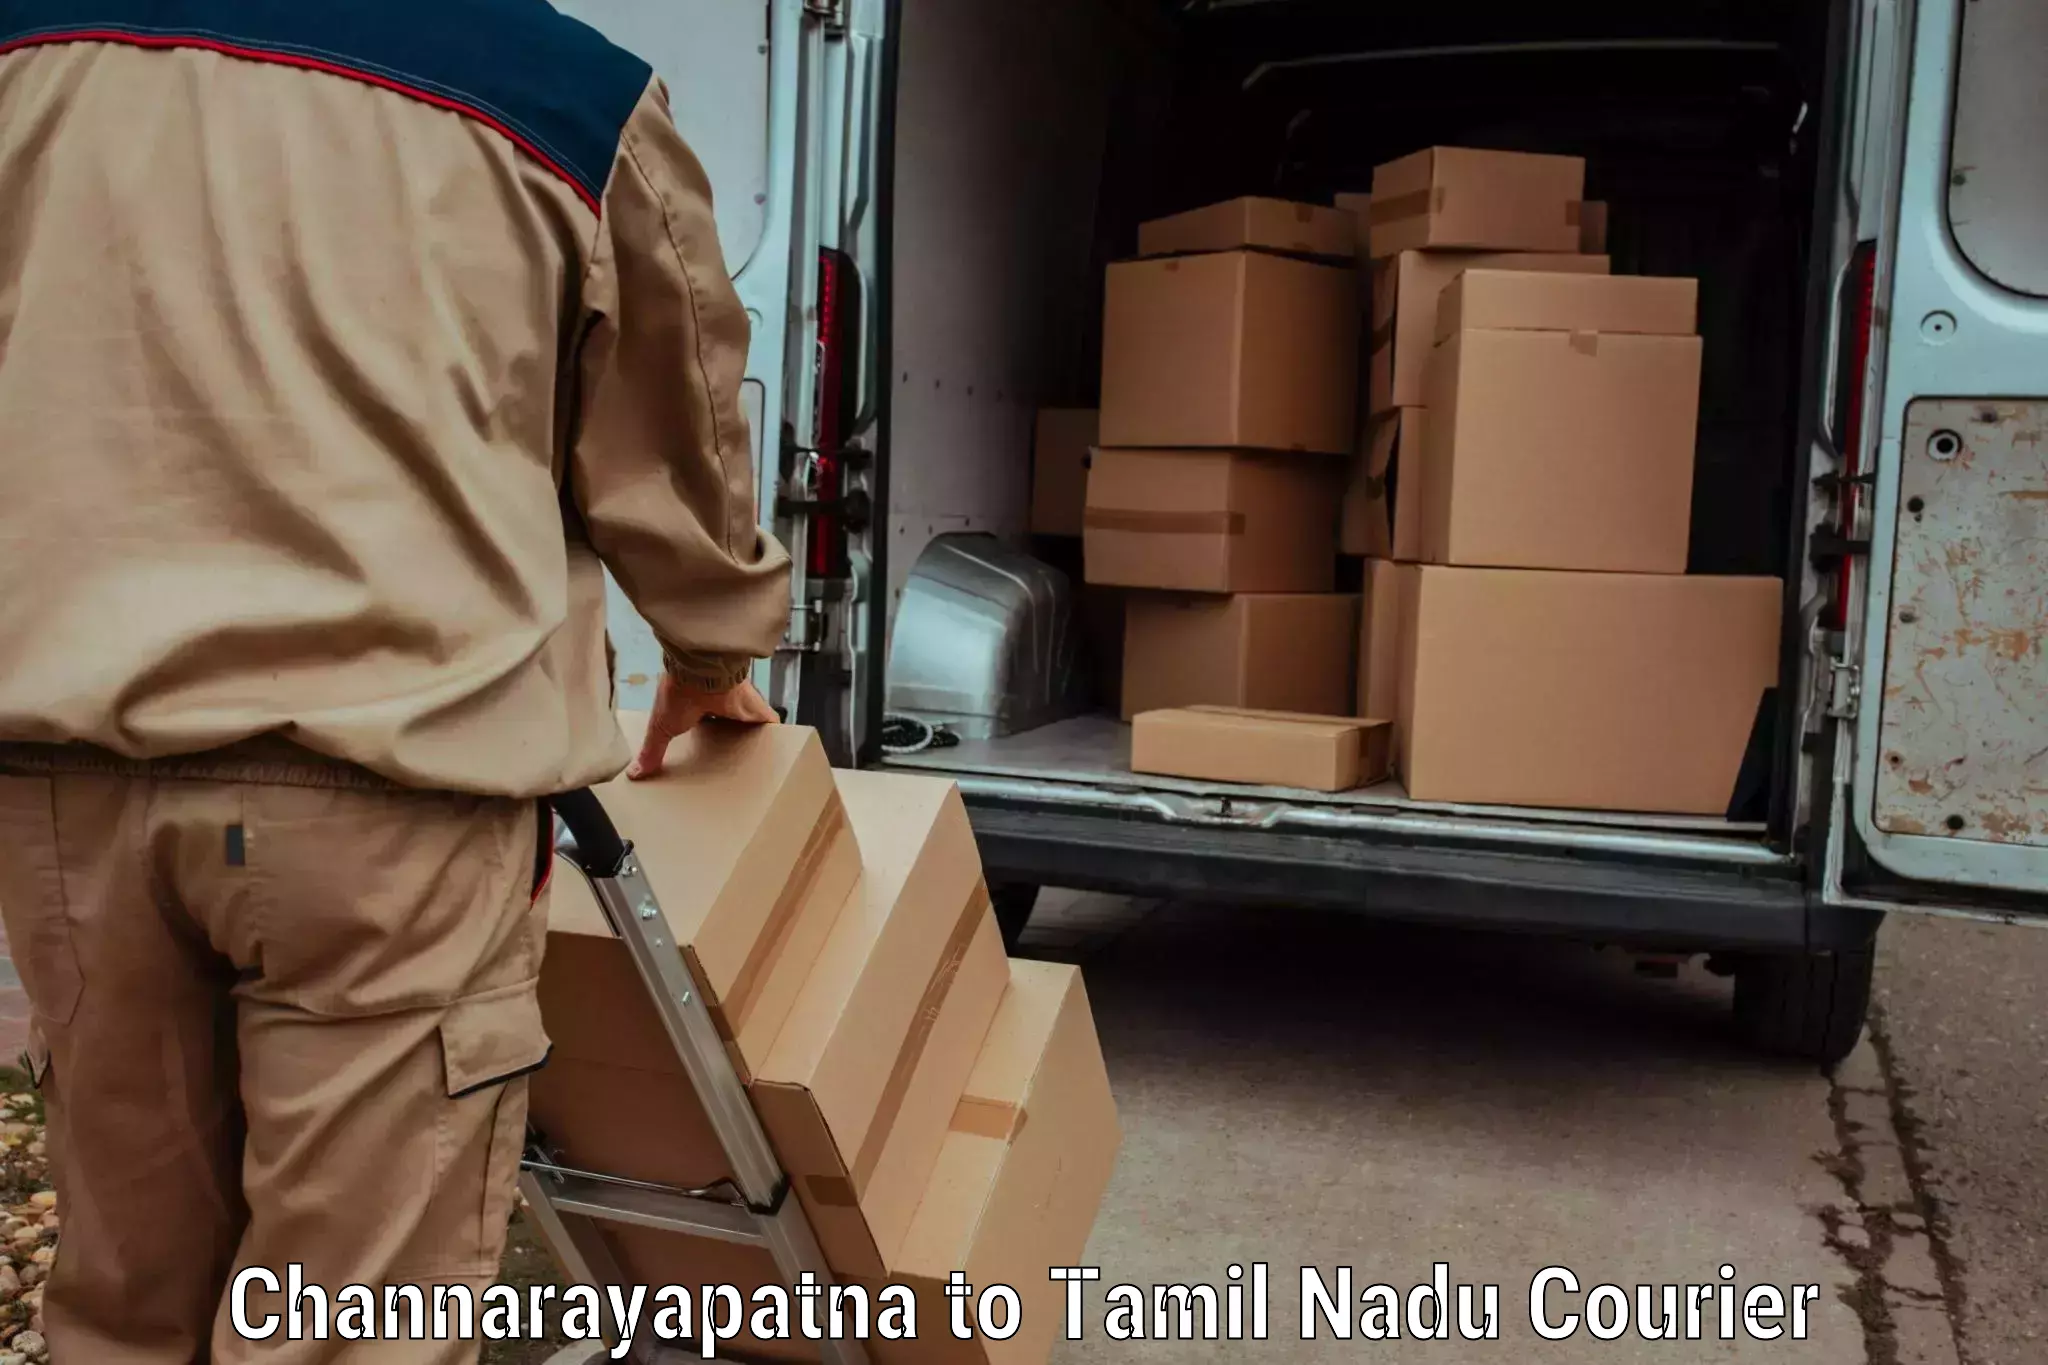 Personalized courier experiences Channarayapatna to Chennai